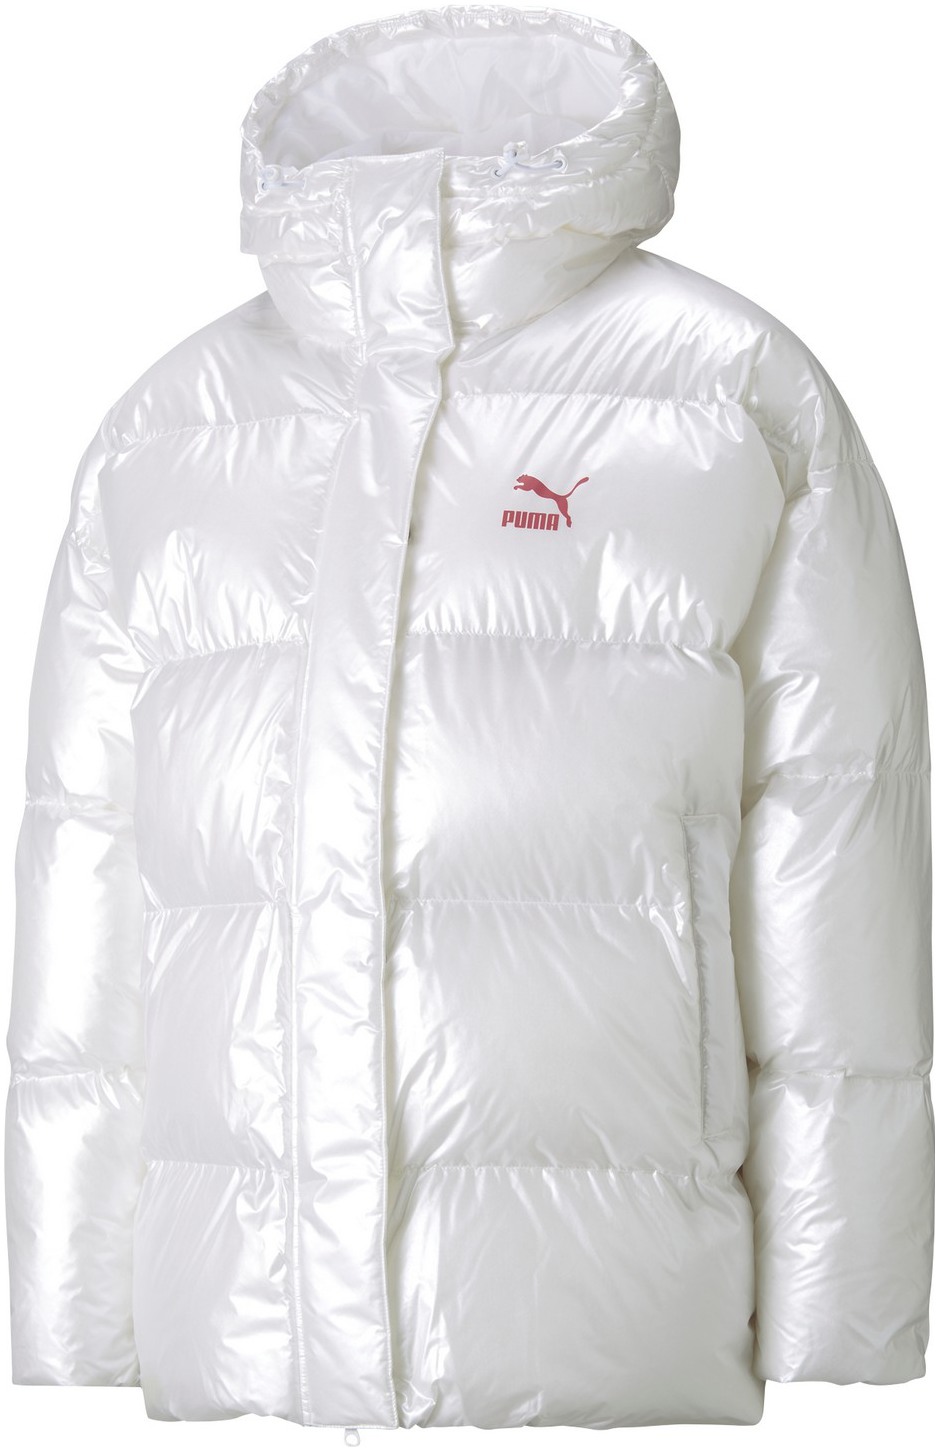 Womens winter jacket Puma CLASSICS AD white | JACKET OVERSIZED W